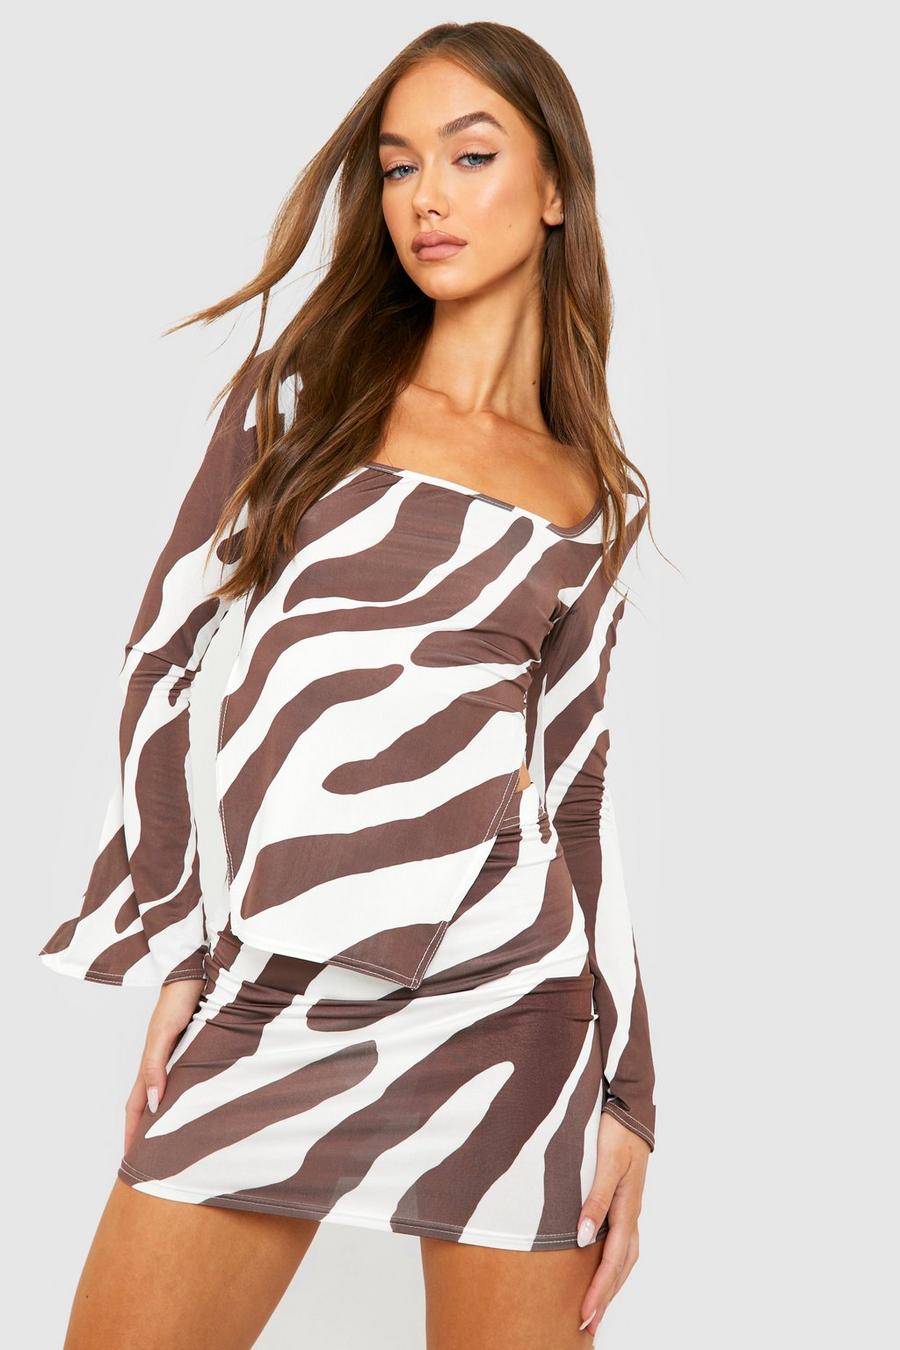 Chocolate brown Zebra Print Puff Sleeve Top